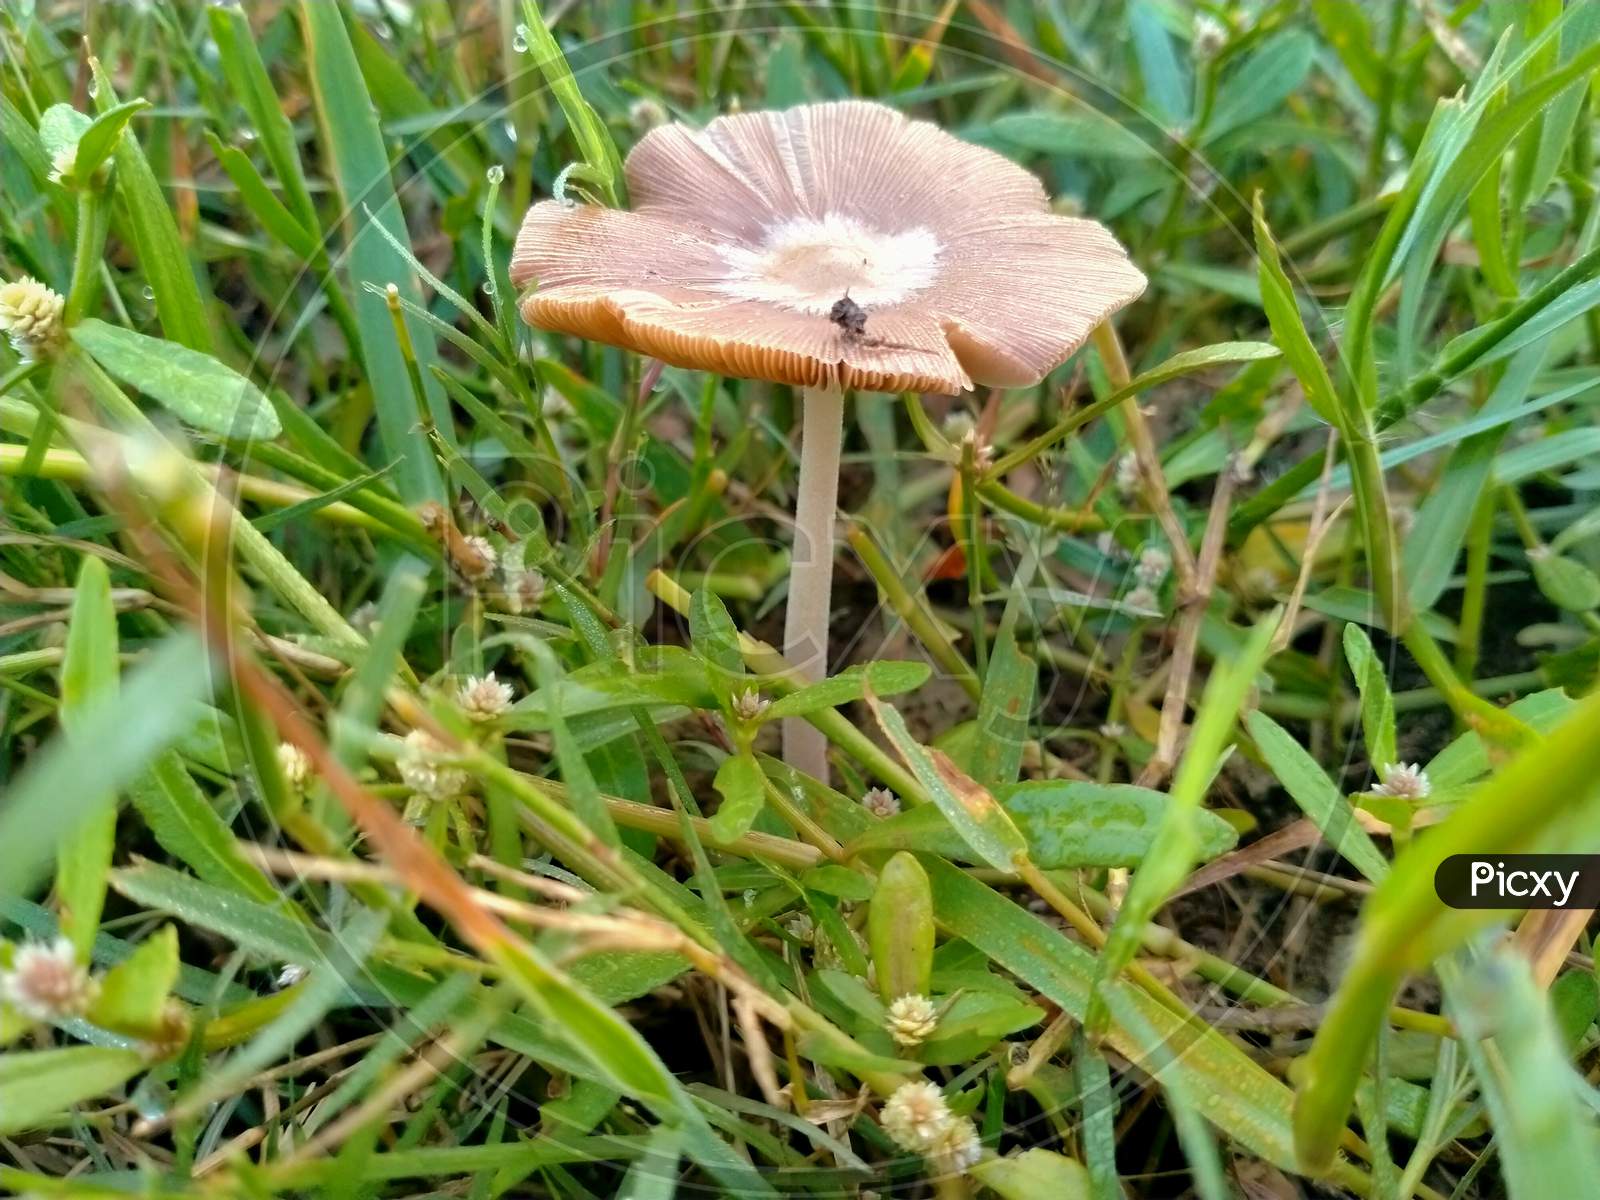 Image Of A Club Fungi Vs Picxy